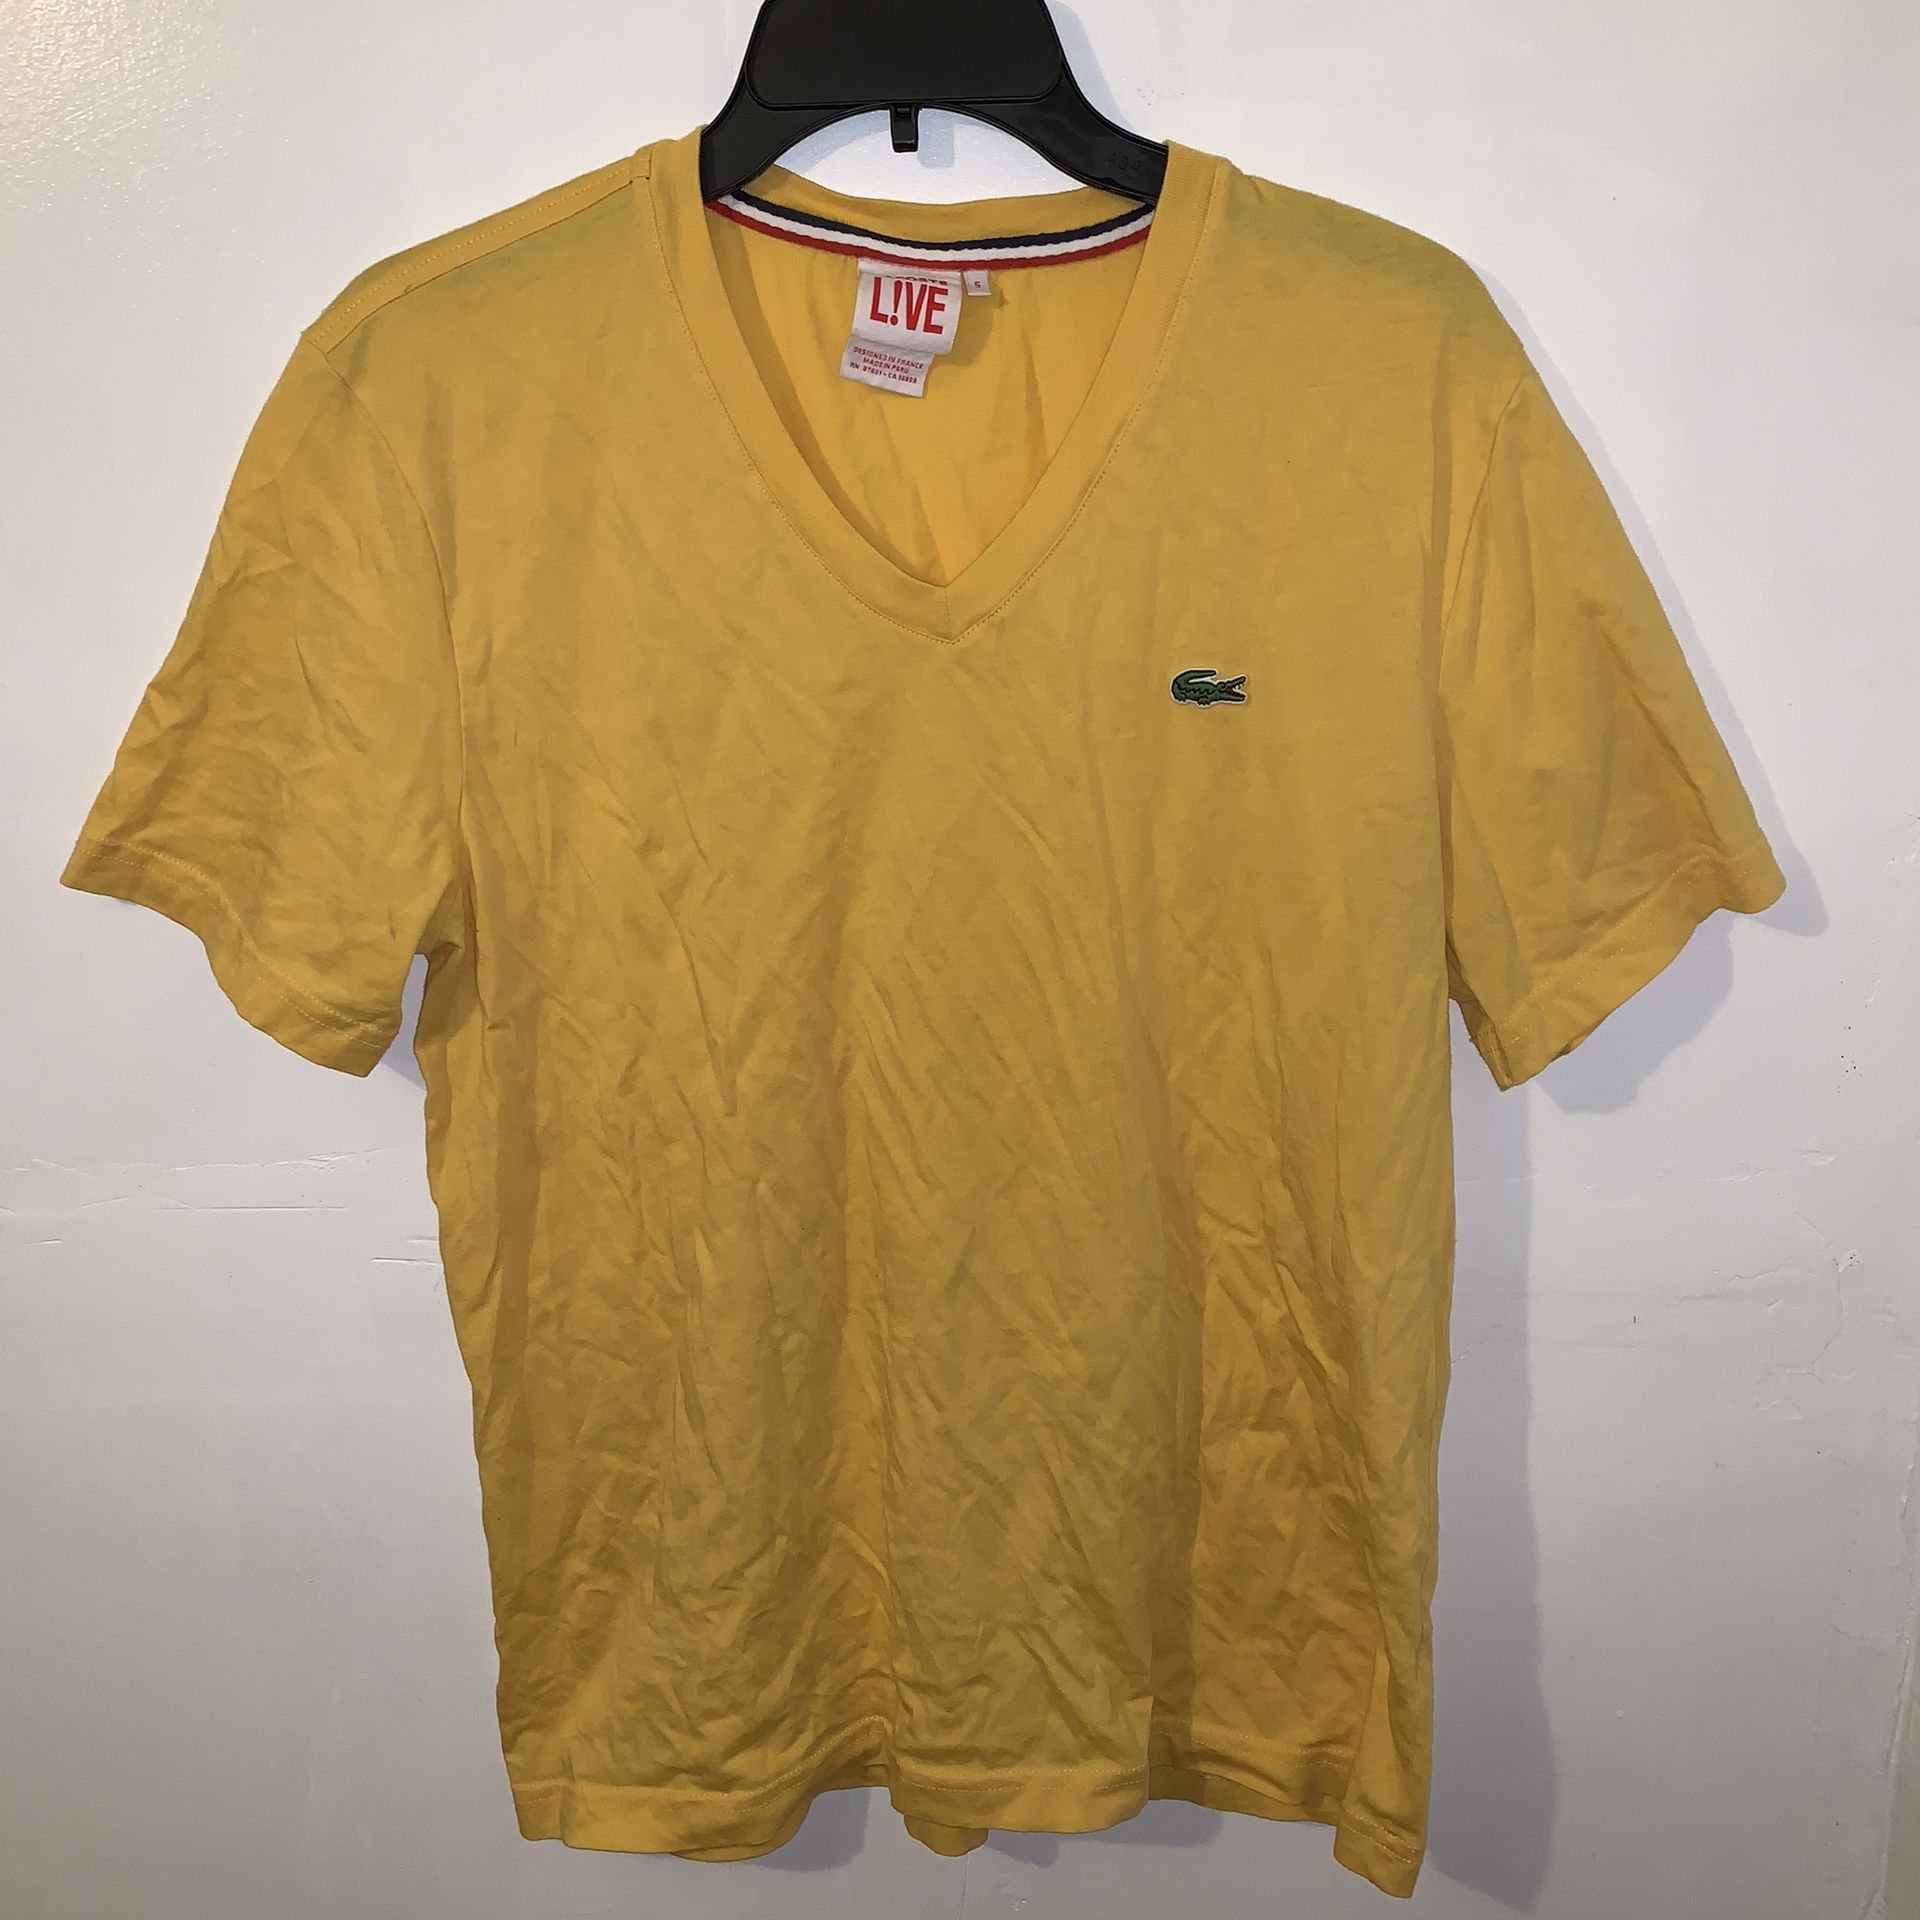 Lacoste Live Men's Yellow T-Shirt Size 5 Large Shirt Tshirt. 5